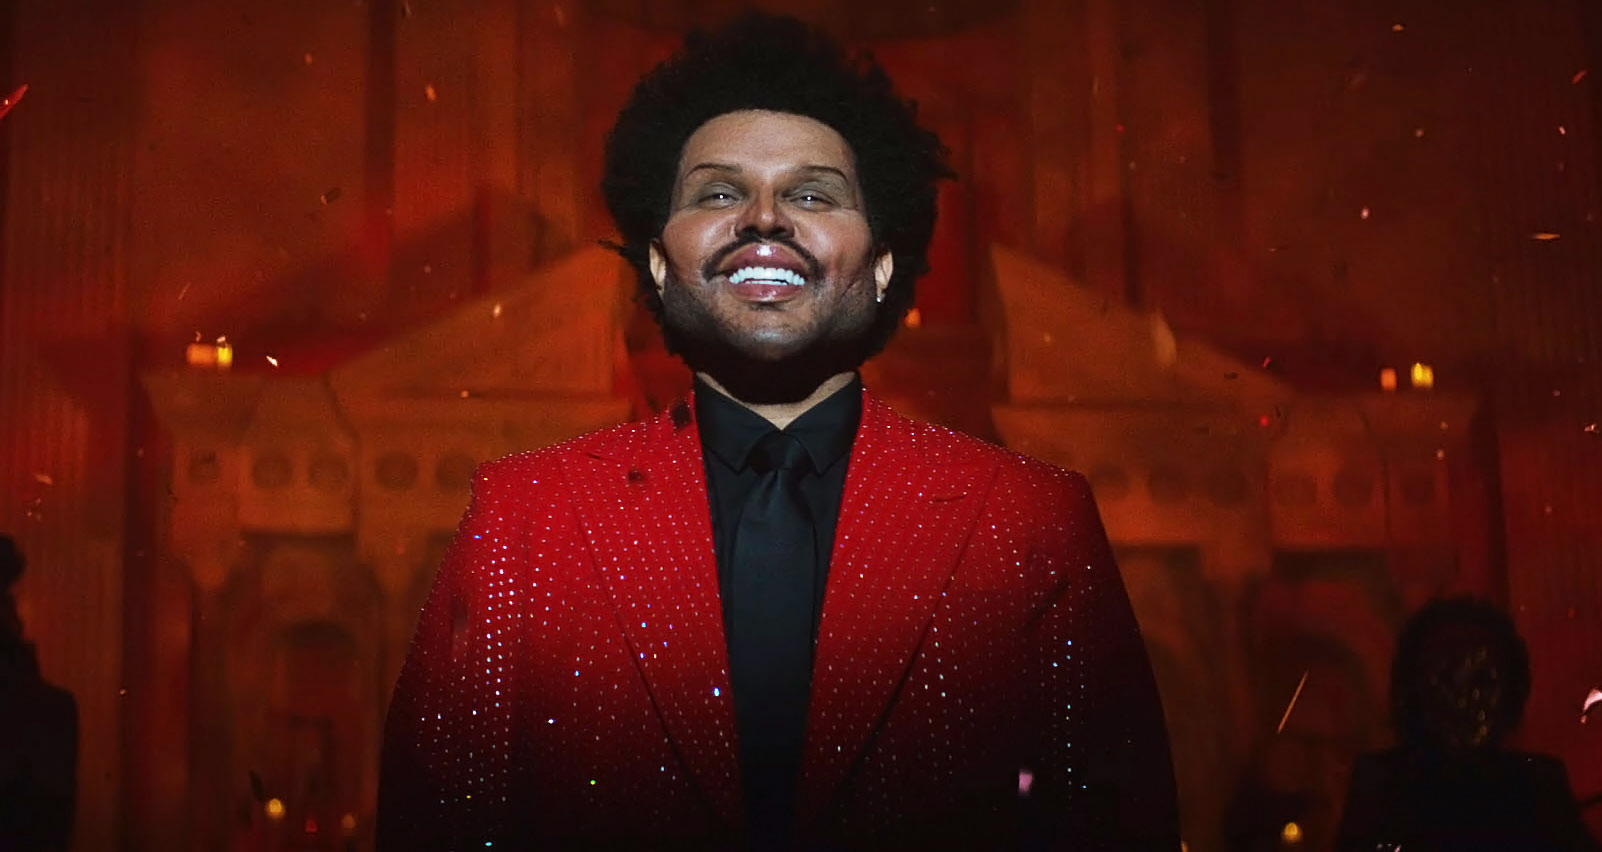 Трек weekend. The Weeknd 2021. The Weeknd певец 2021. The Weeknd фото 2021. The Weeknd 2021 пластика.